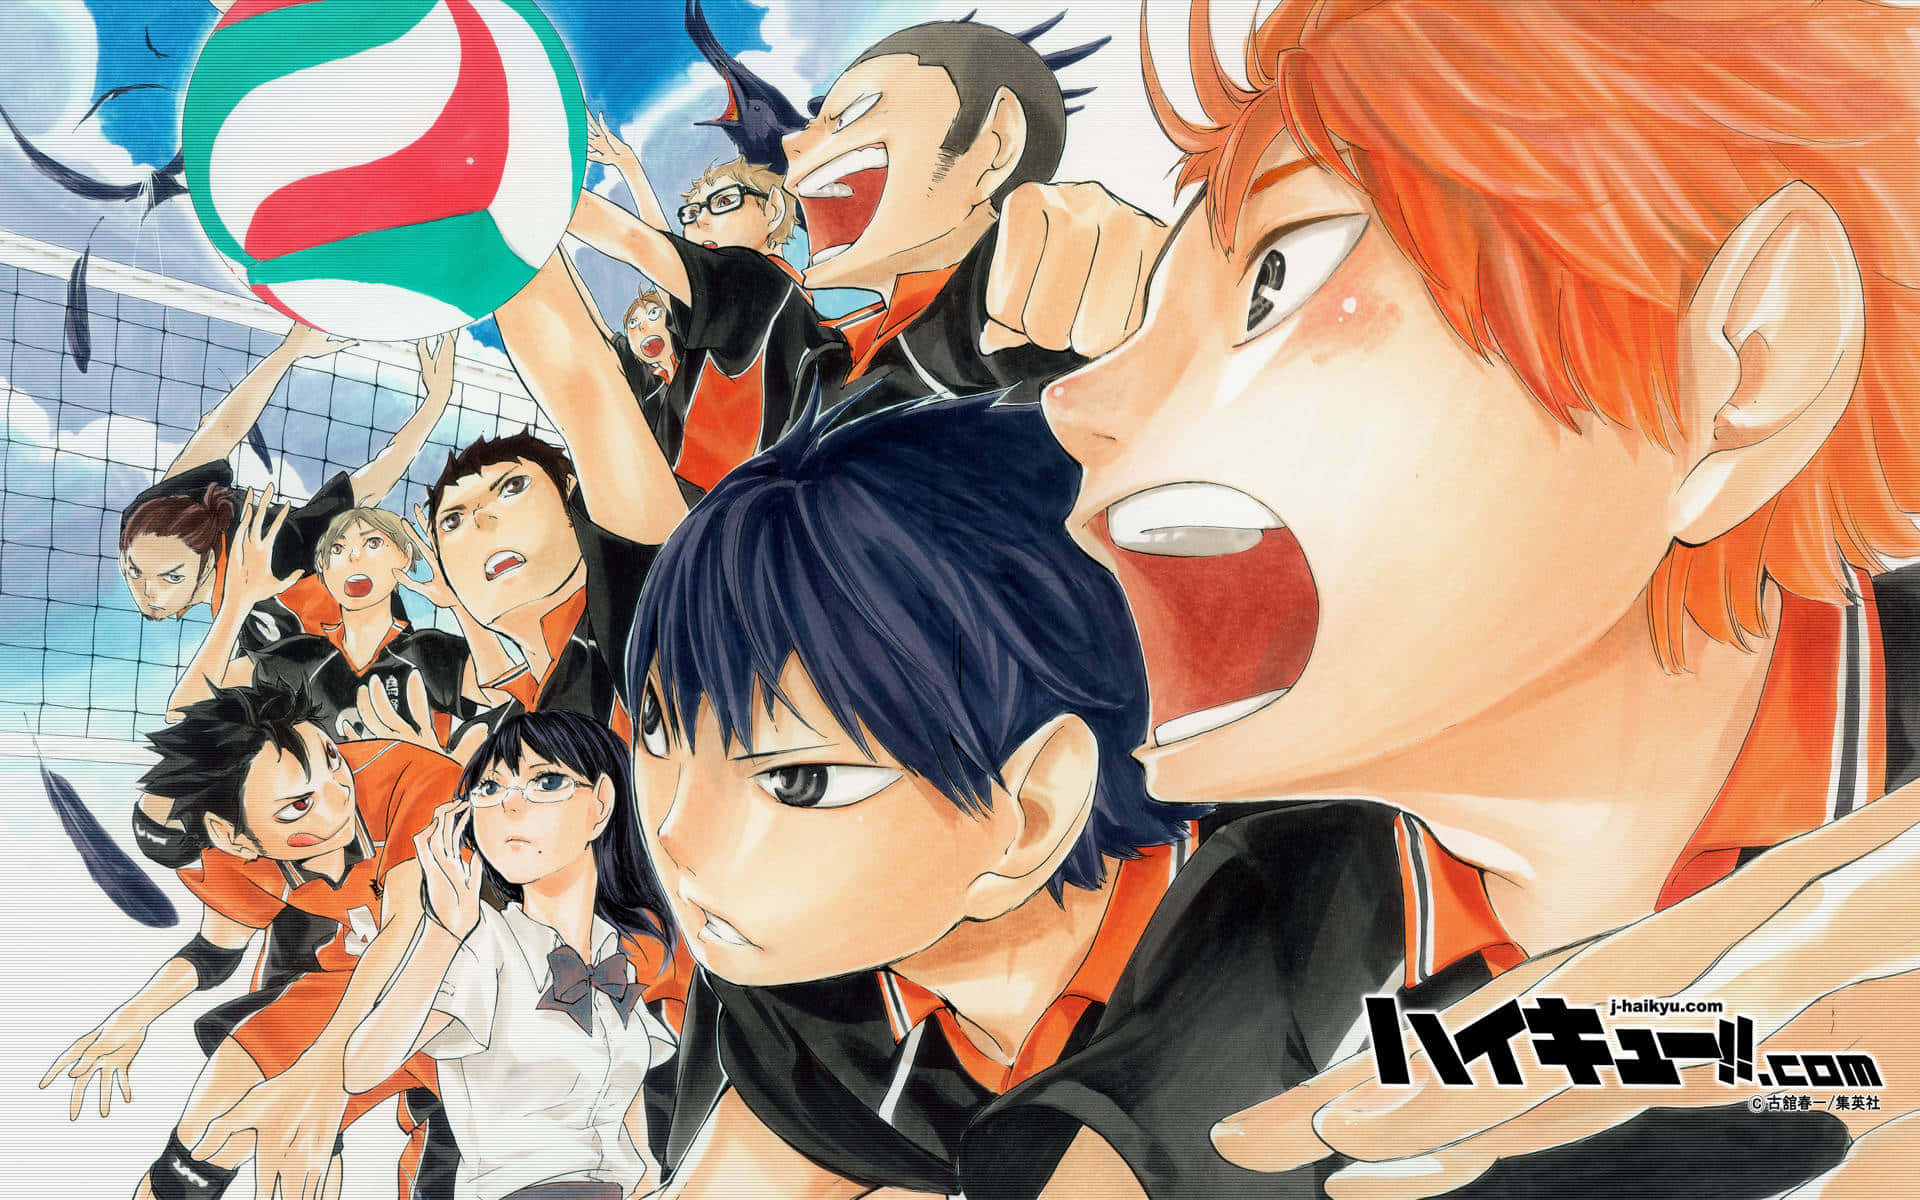 HD wallpaper: hinata shouyo, haikyuu, volleyball, anime, group of people